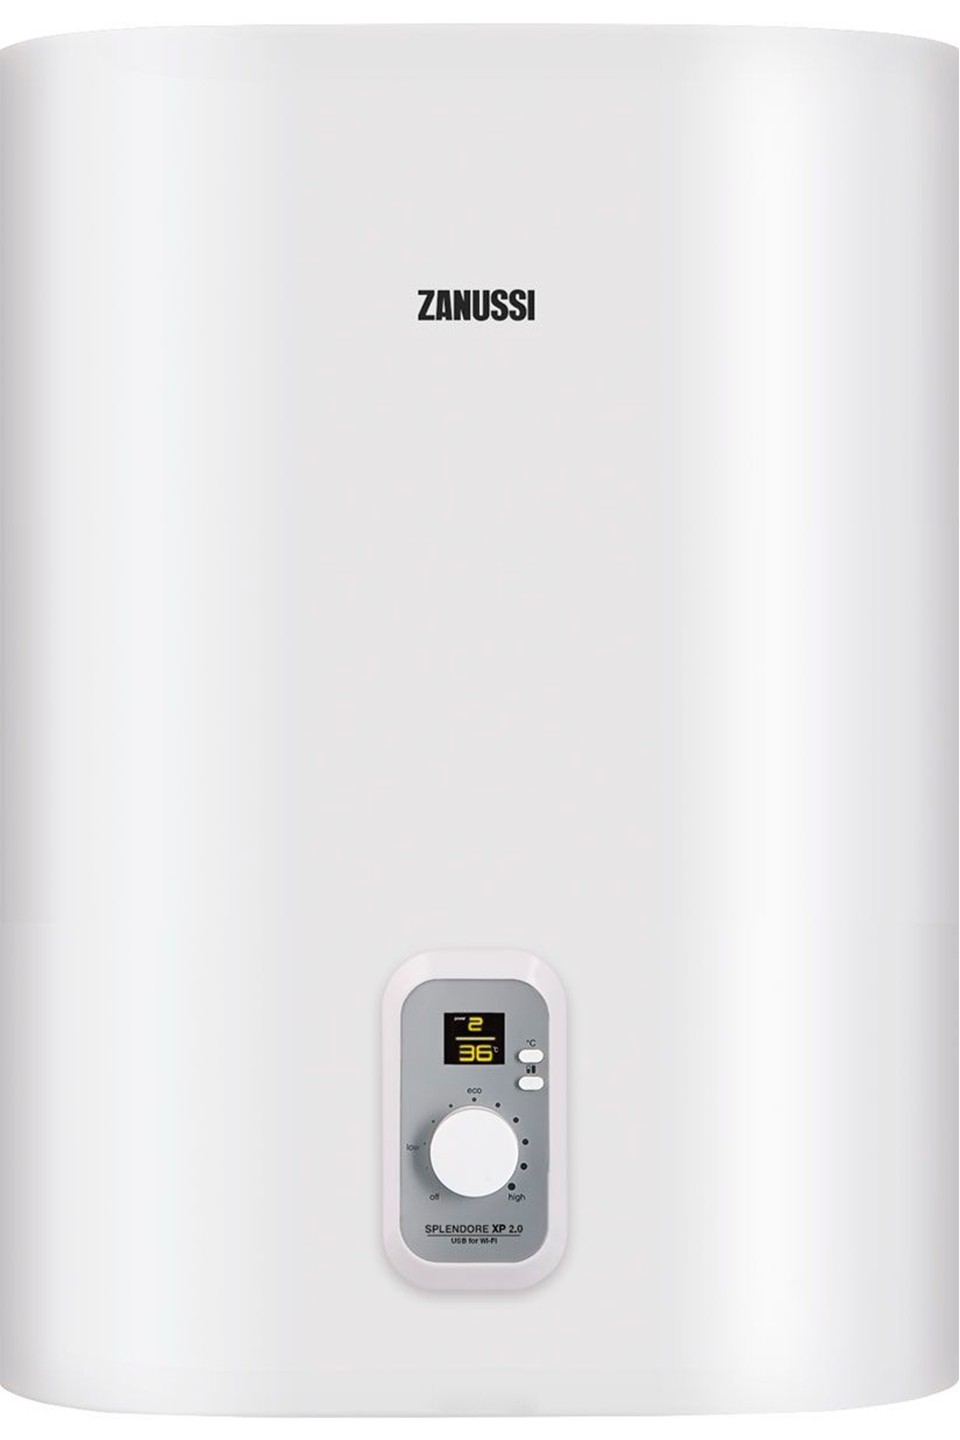 Бойлер Zanussi ZWH/S 30 Splendore XP 2.0 в интернет-магазине, главное фото